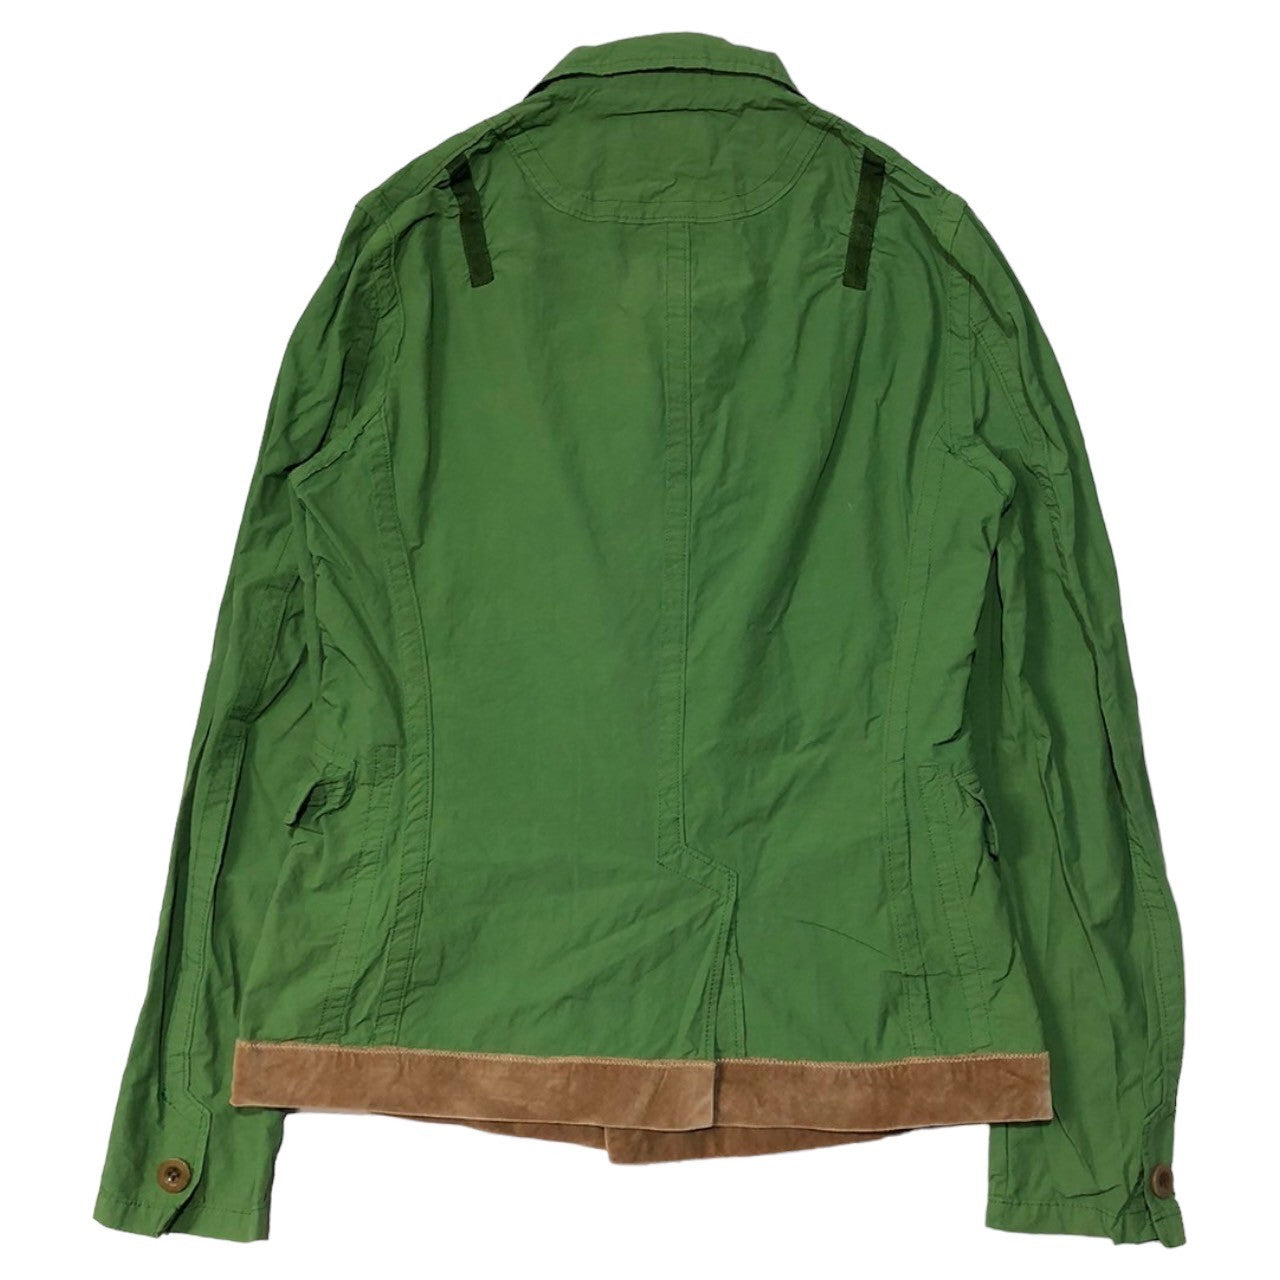 kolor(カラー) 14SS Velor switching nylon jacket ベロア 切替 ナイロン ジャケット 14SCM-J02102 SIZE 1(S) グリーン